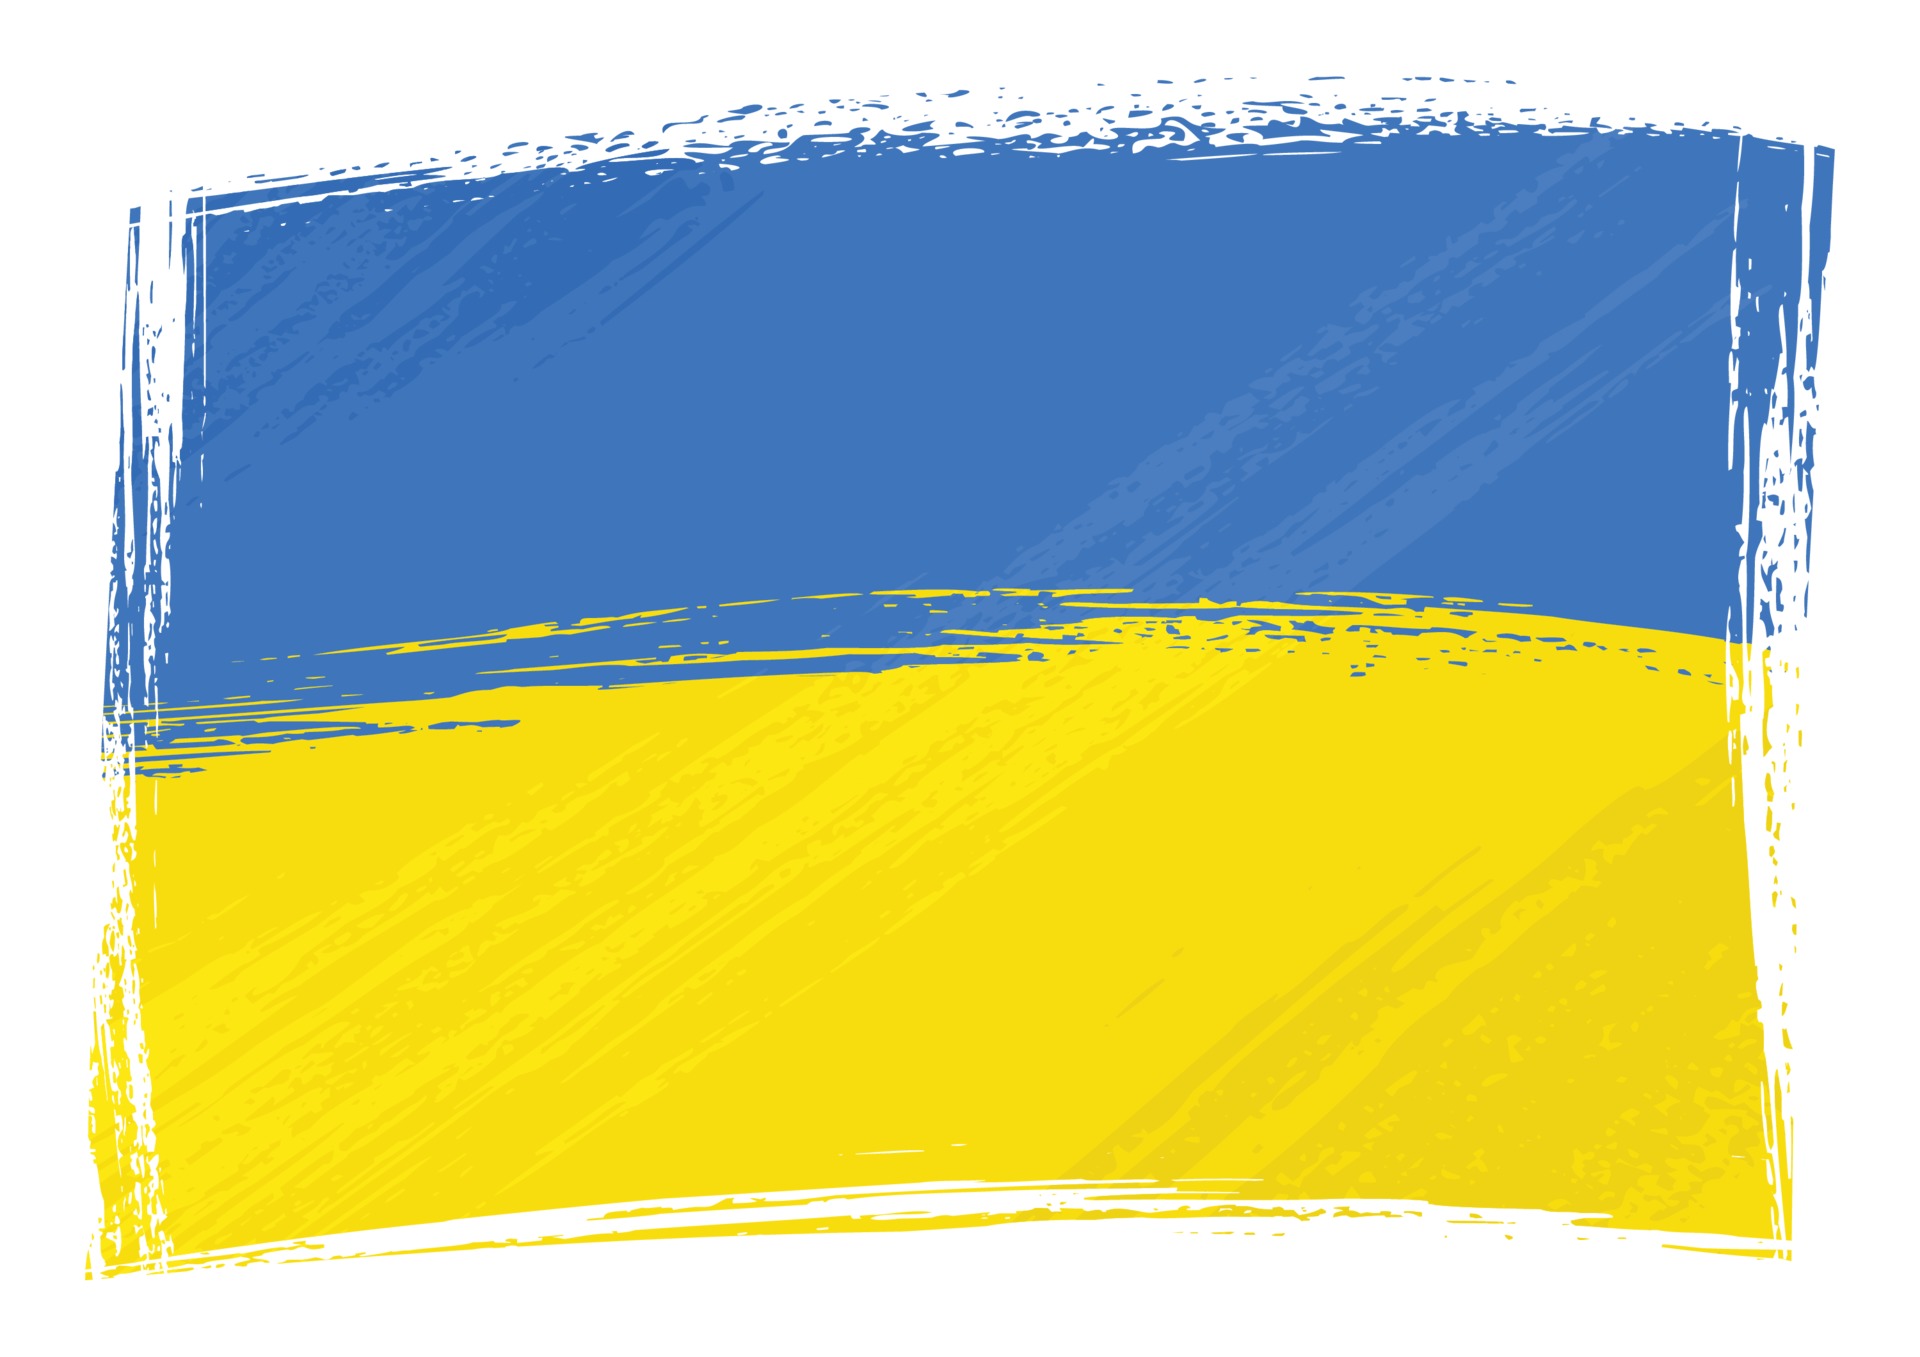 Illustration of the Ukrainian flag